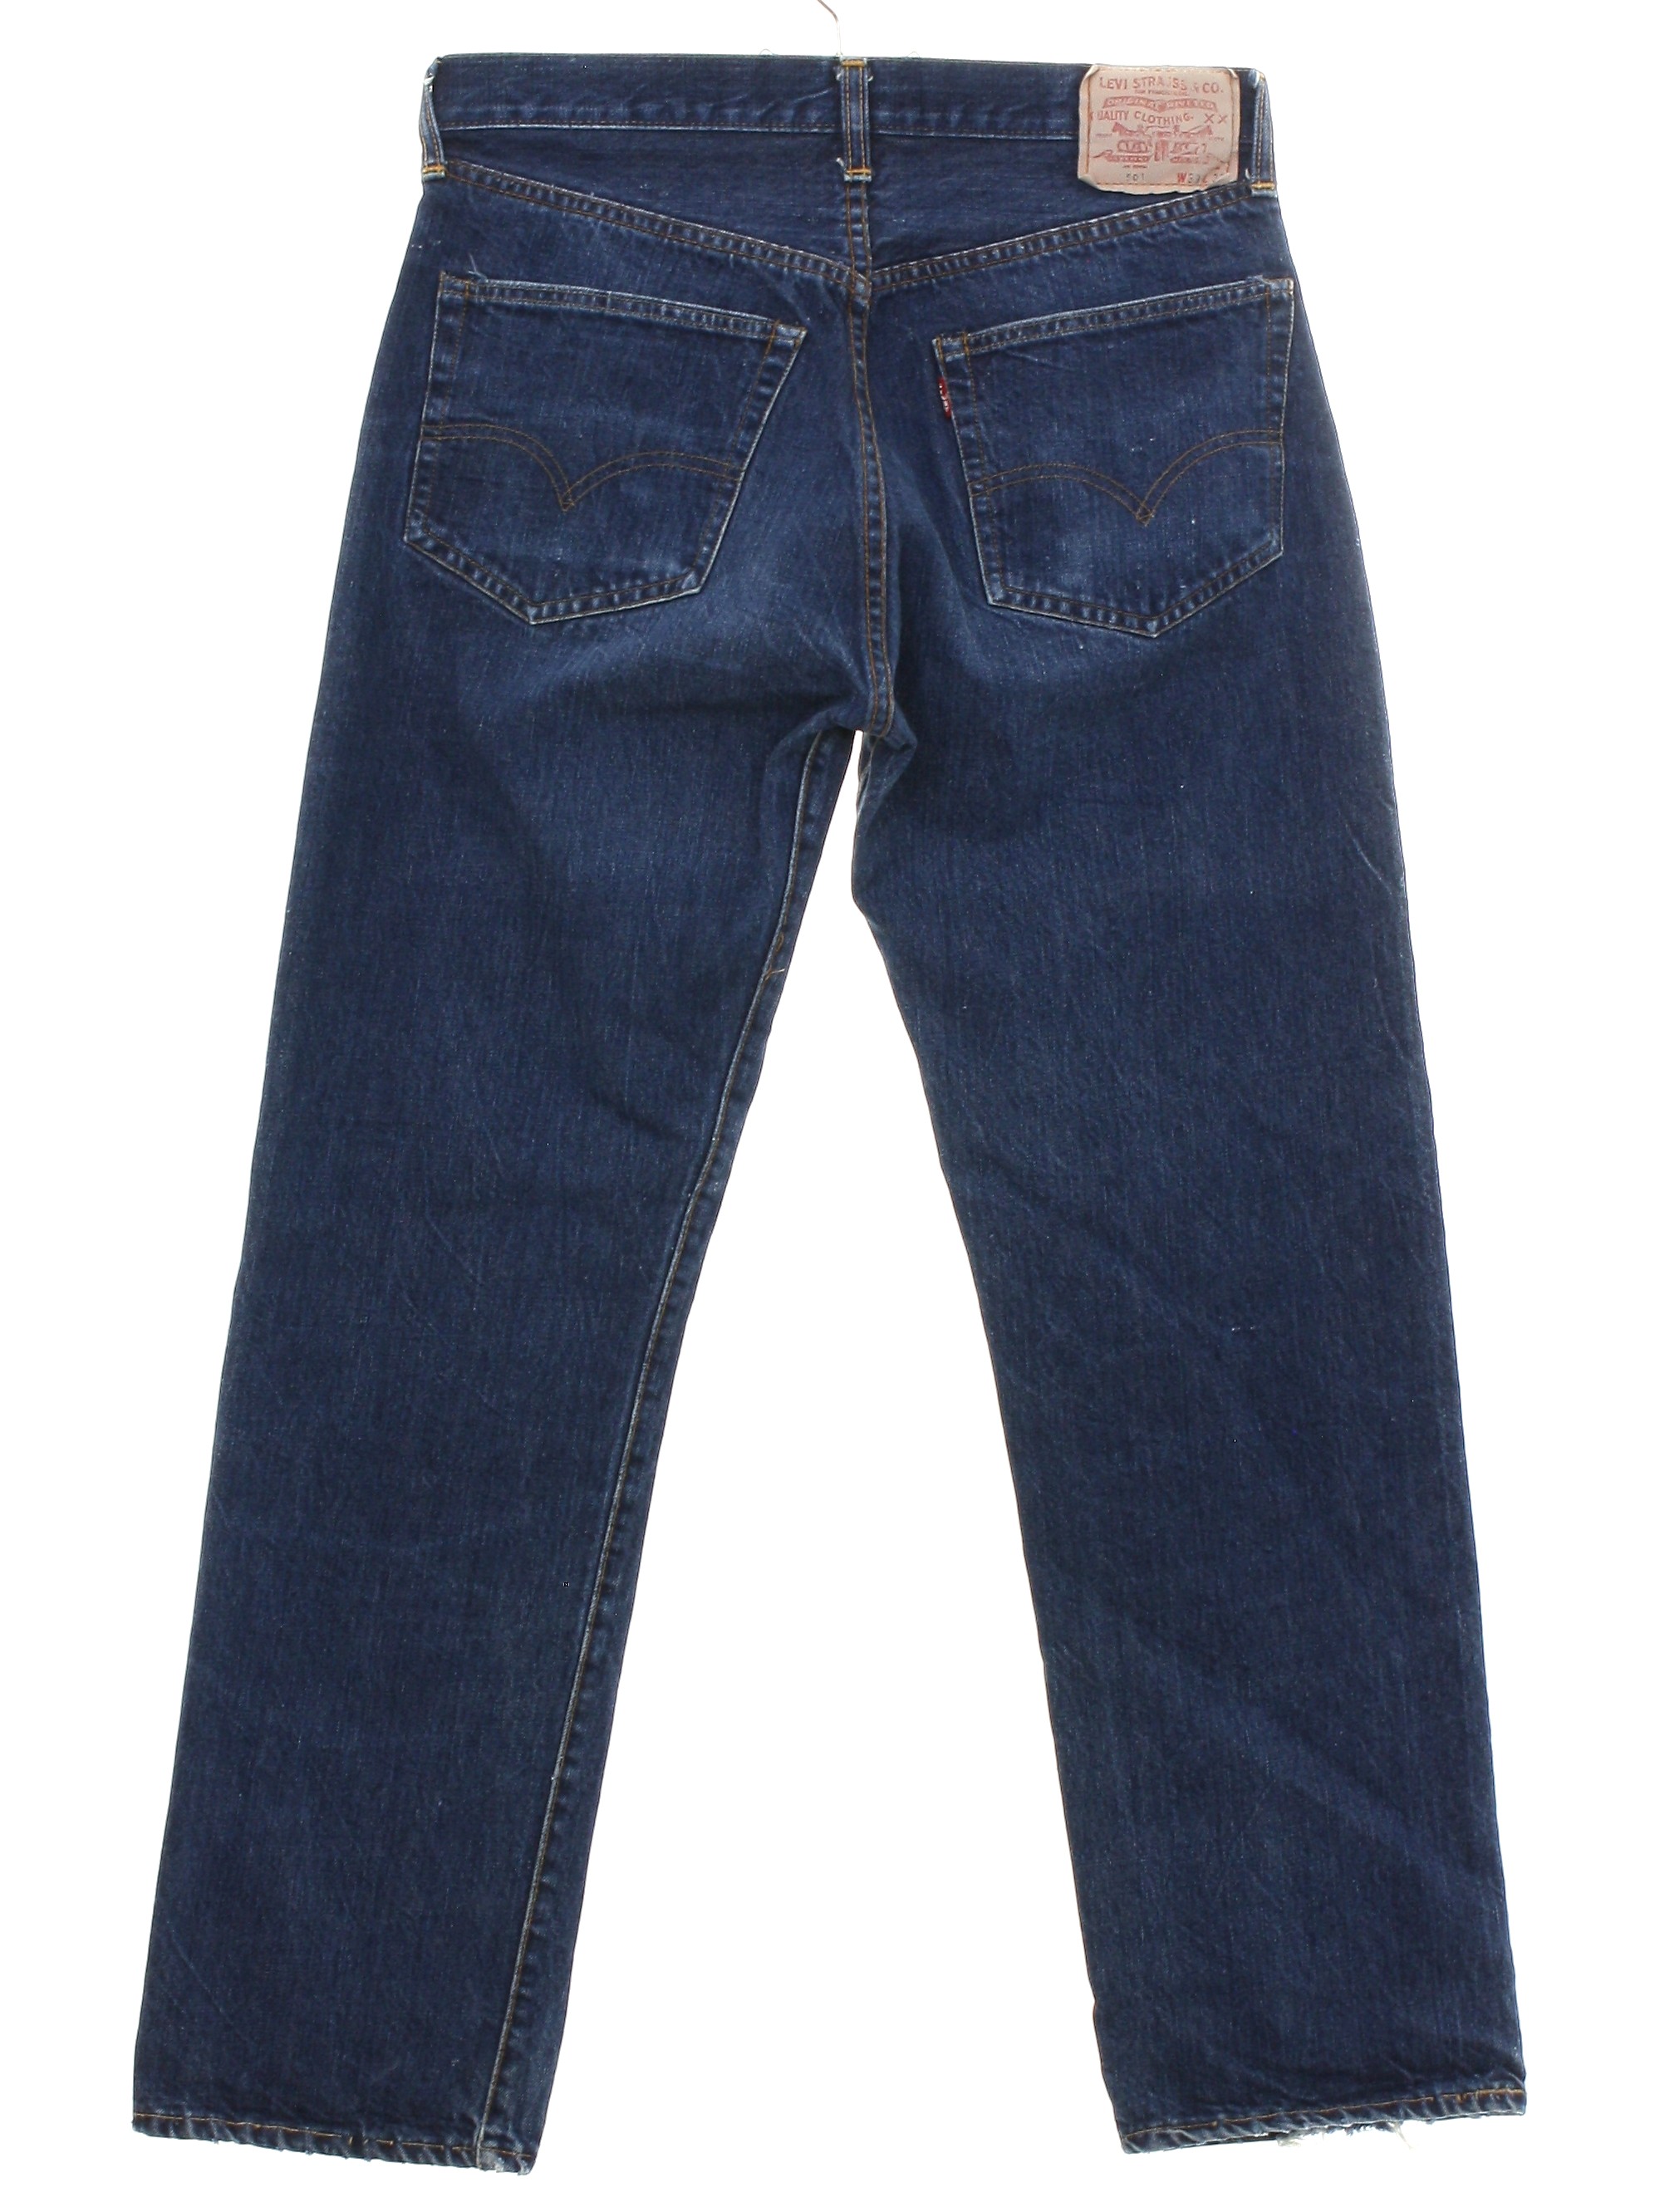 Levis 501s Sixties Vintage Pants: 60s -Levis 501s- Mens dark blue ...